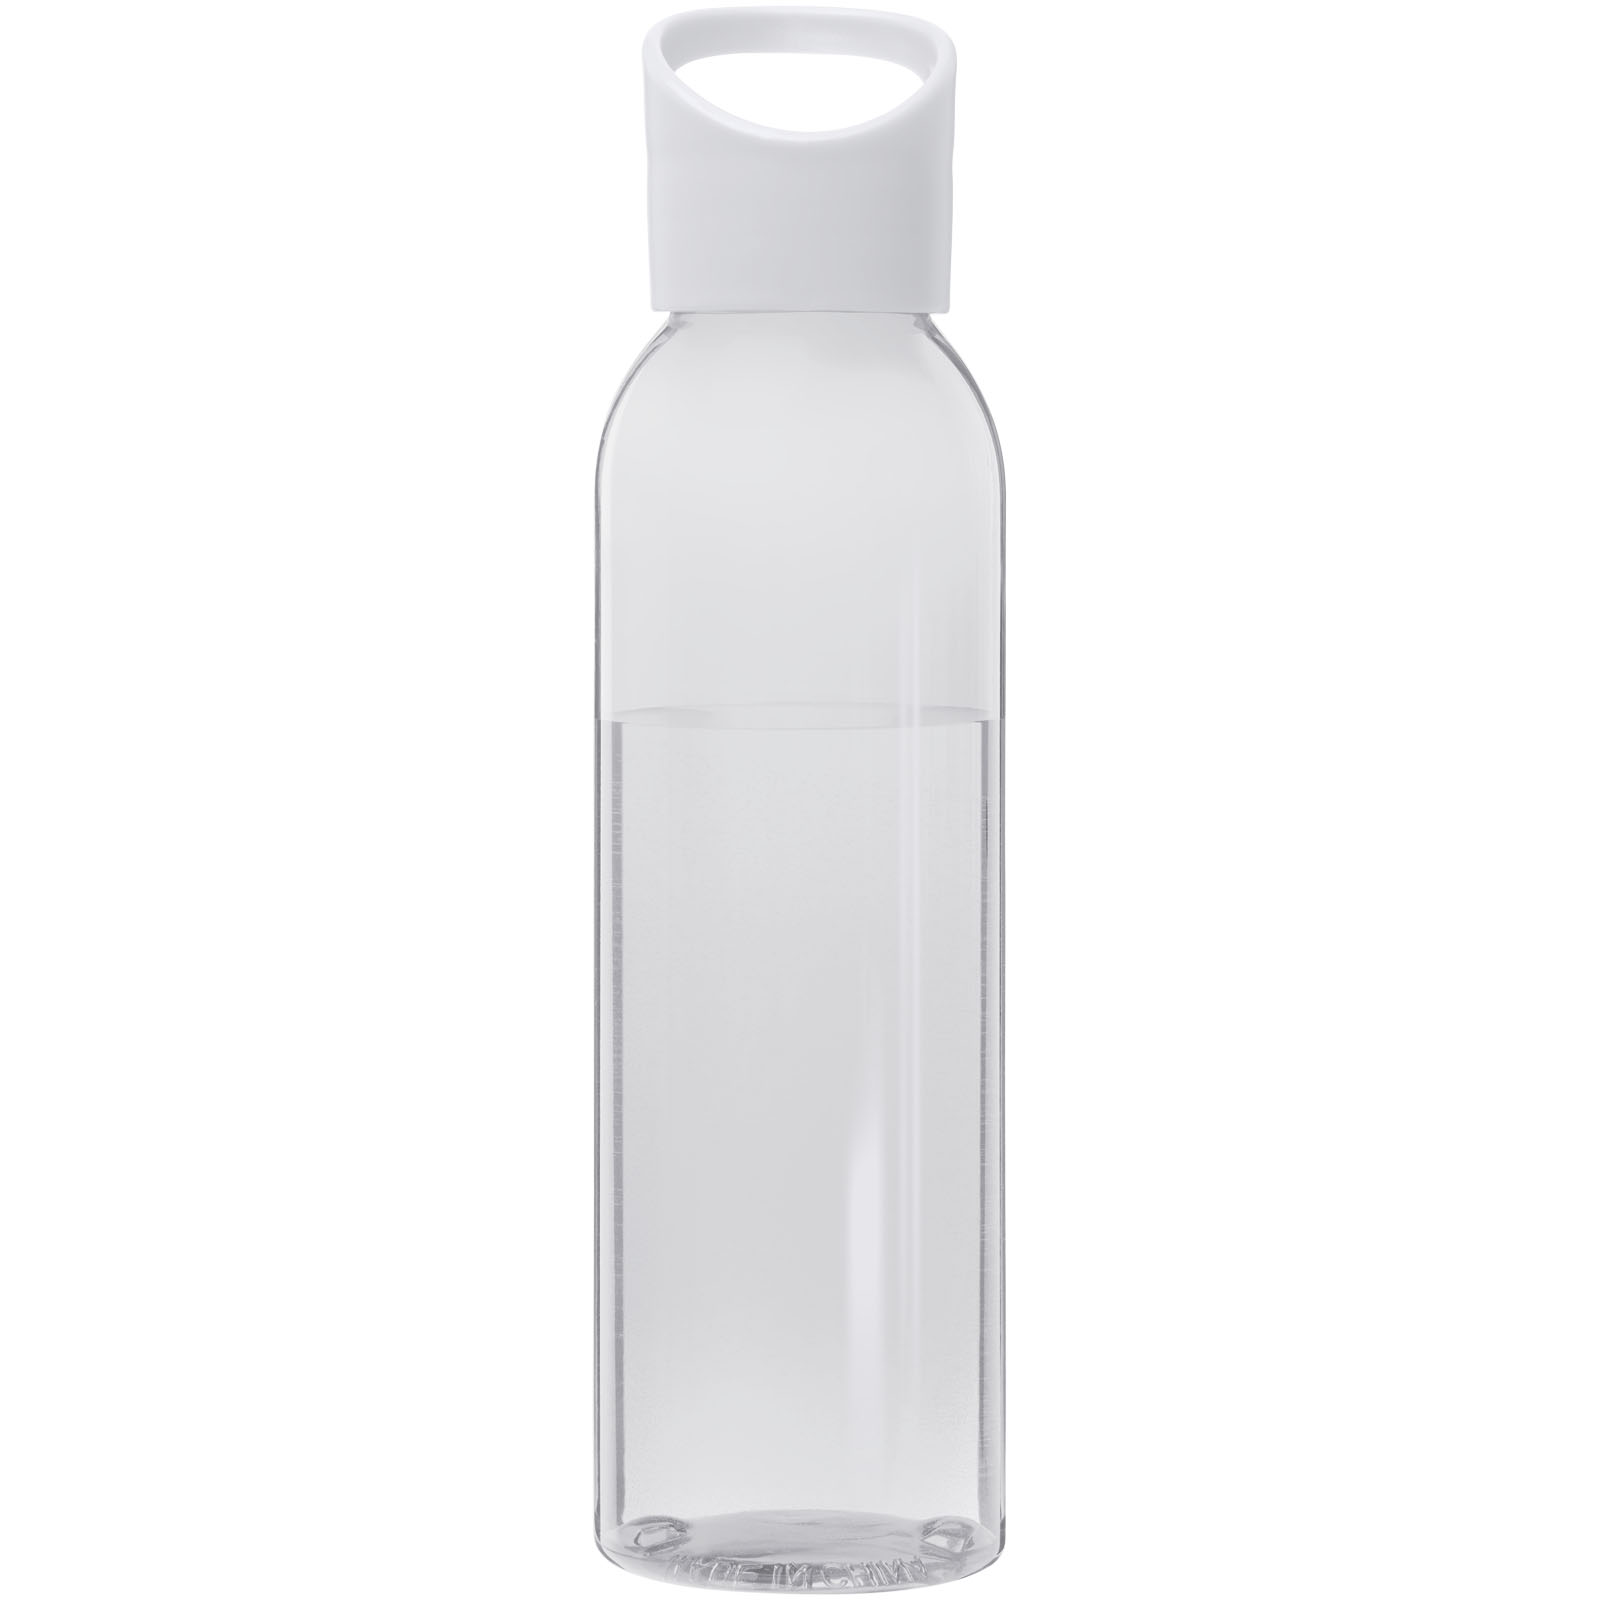 Advertising Water bottles - Sky 650 ml recycled plastic water bottle - 2